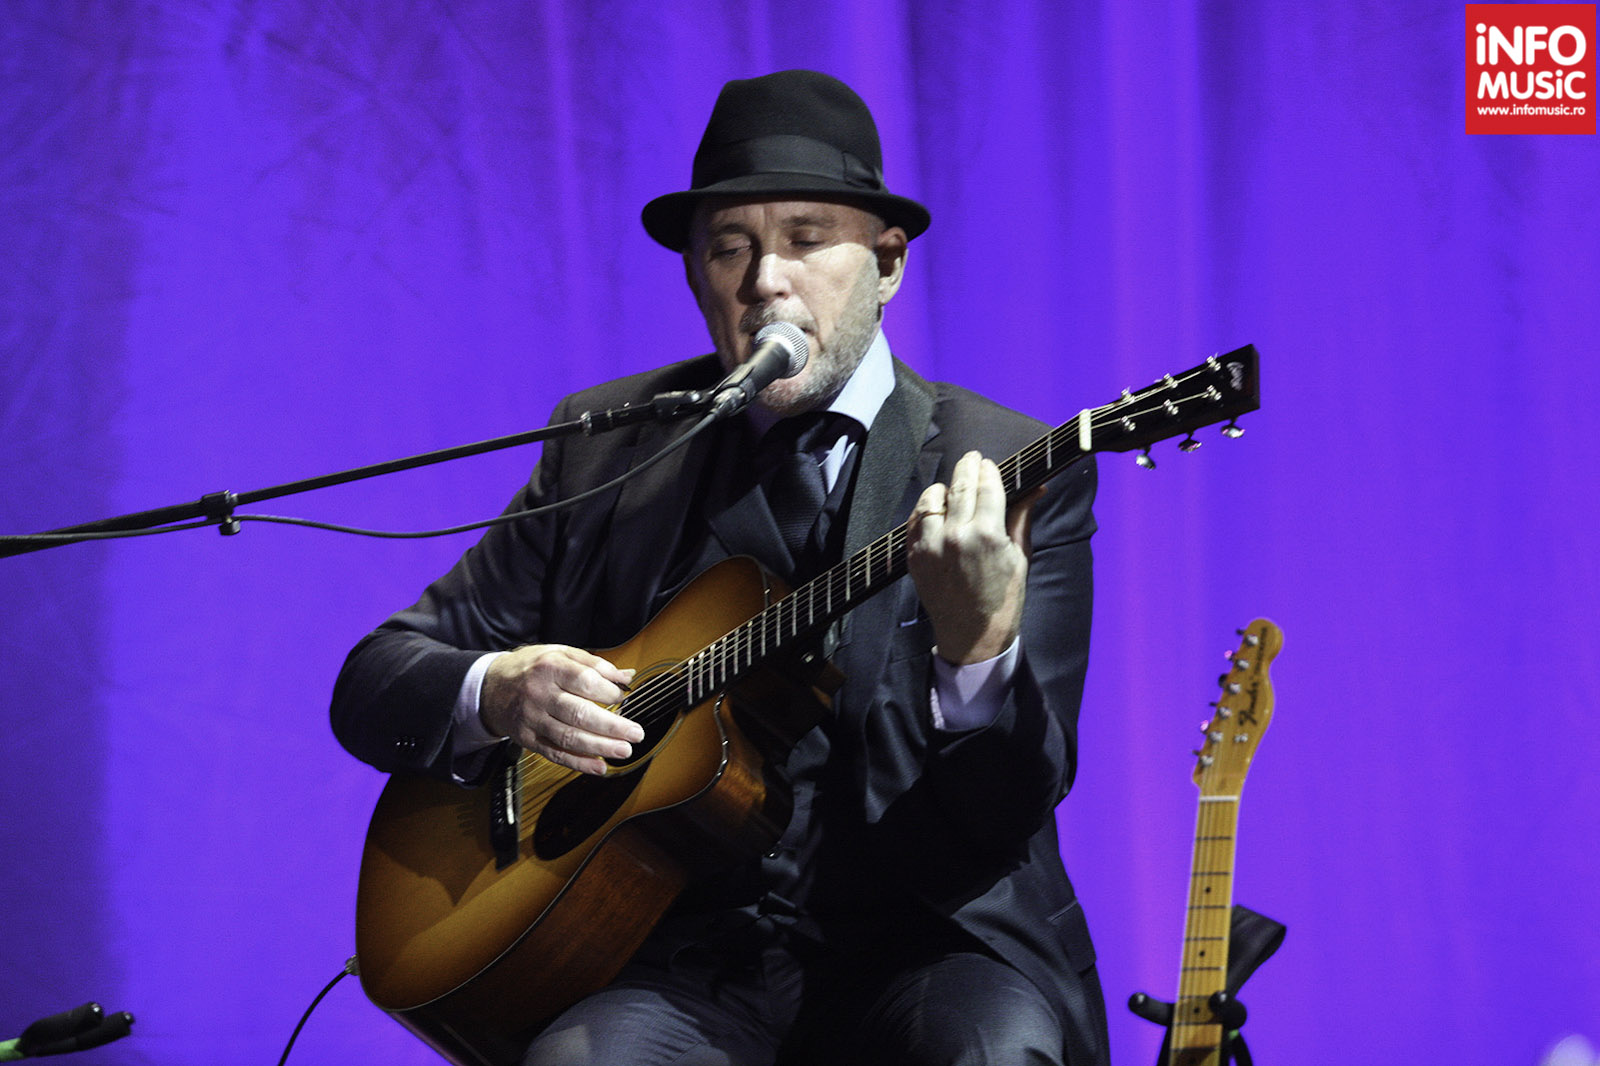 Leonard Cohen in concert la Bucuresti - Piata Constitutiei, 2012